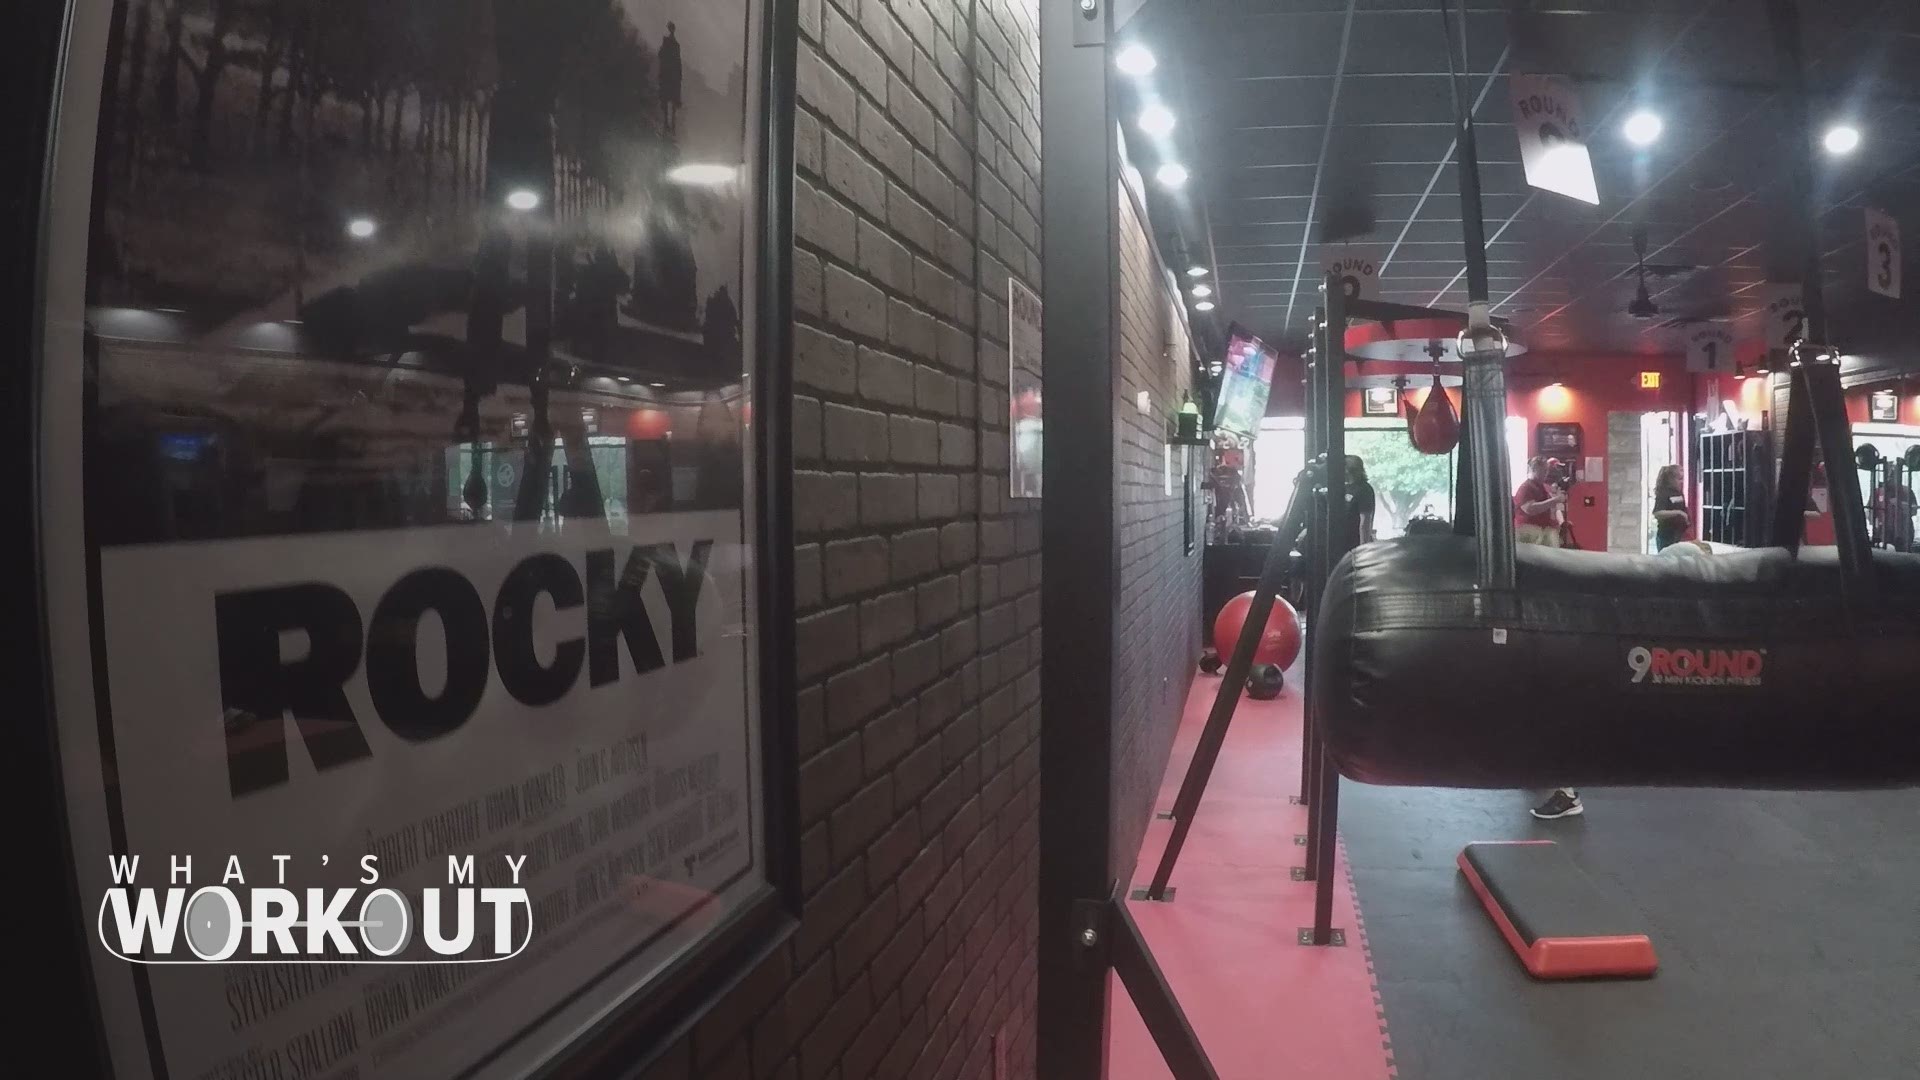 We take you inside a kickboxing workout.